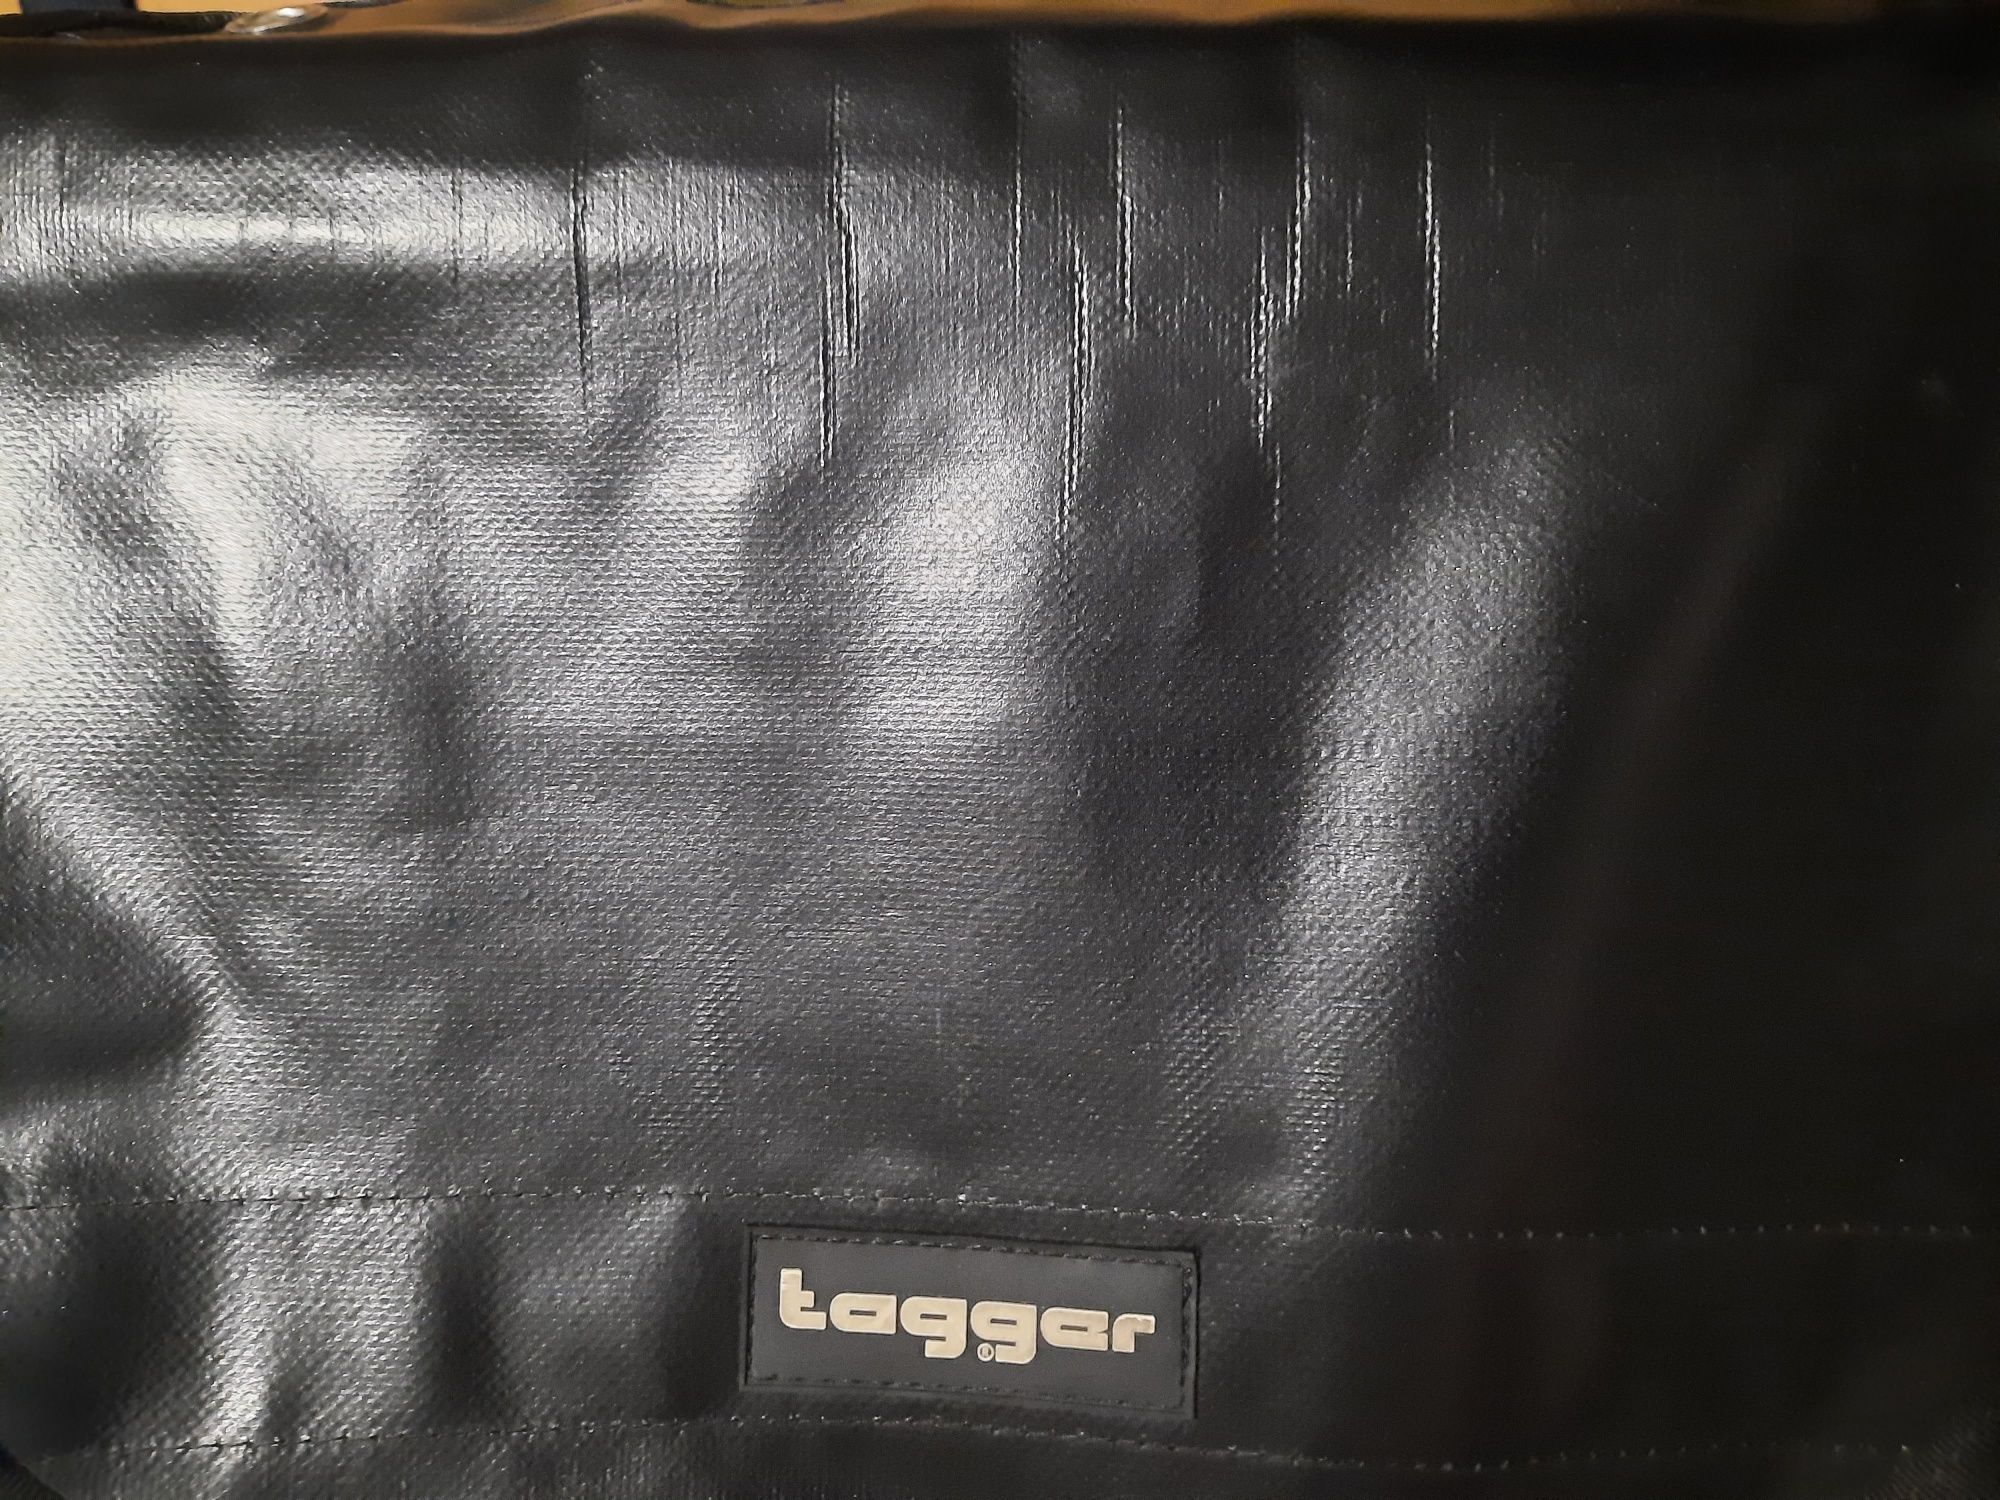 Bolsa / Mala / Bag Tagger - 3 capas com 3 cores diferentes